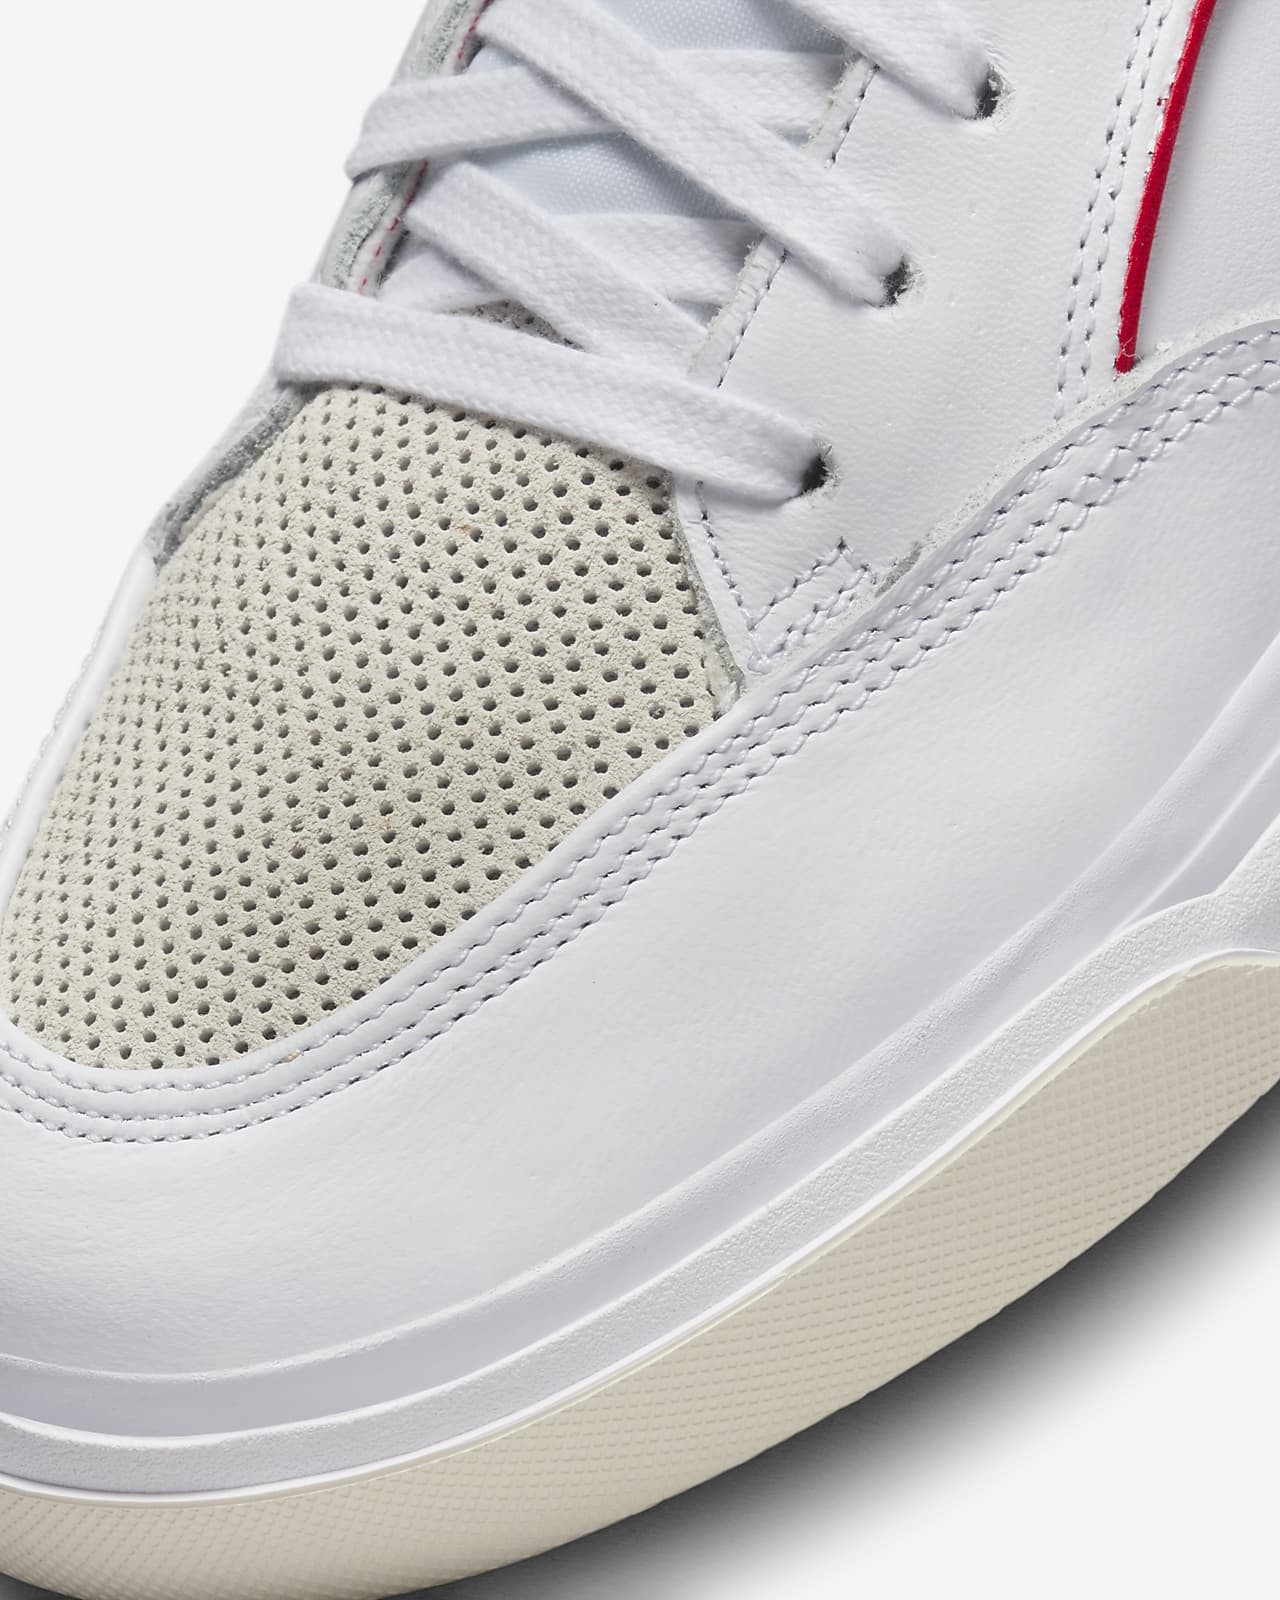 Nike SB React Leo Premium Skate Shoes.